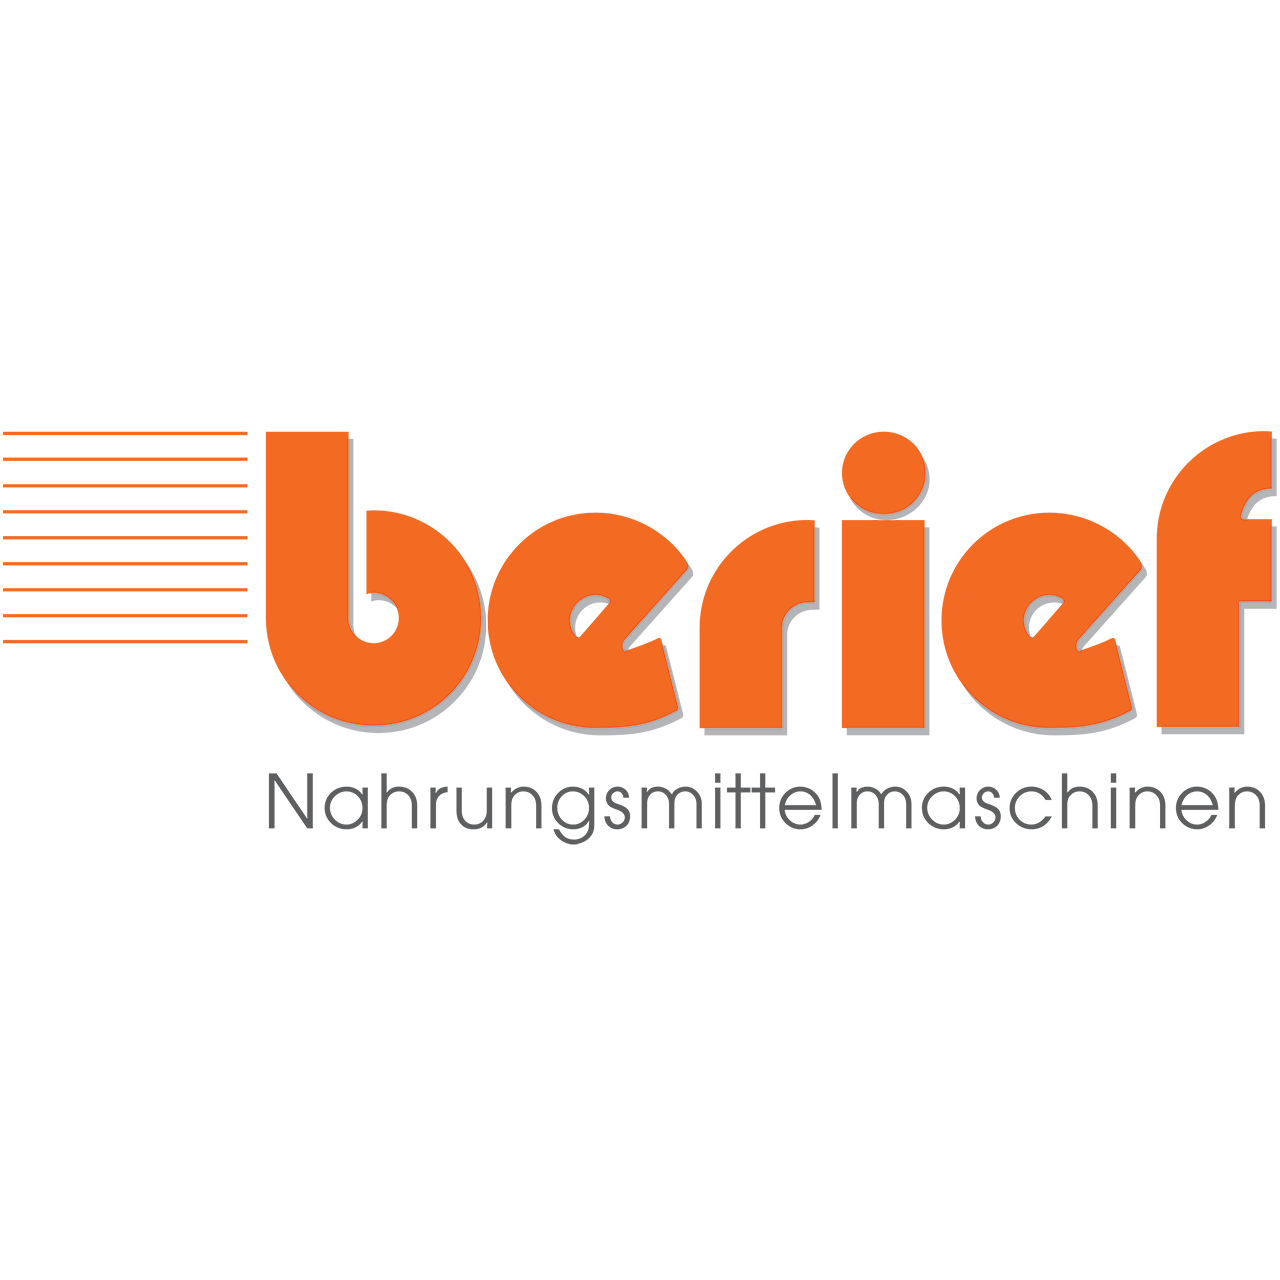 Berief Nahrungsmittelmaschinen GmbH & Co. KG Logo